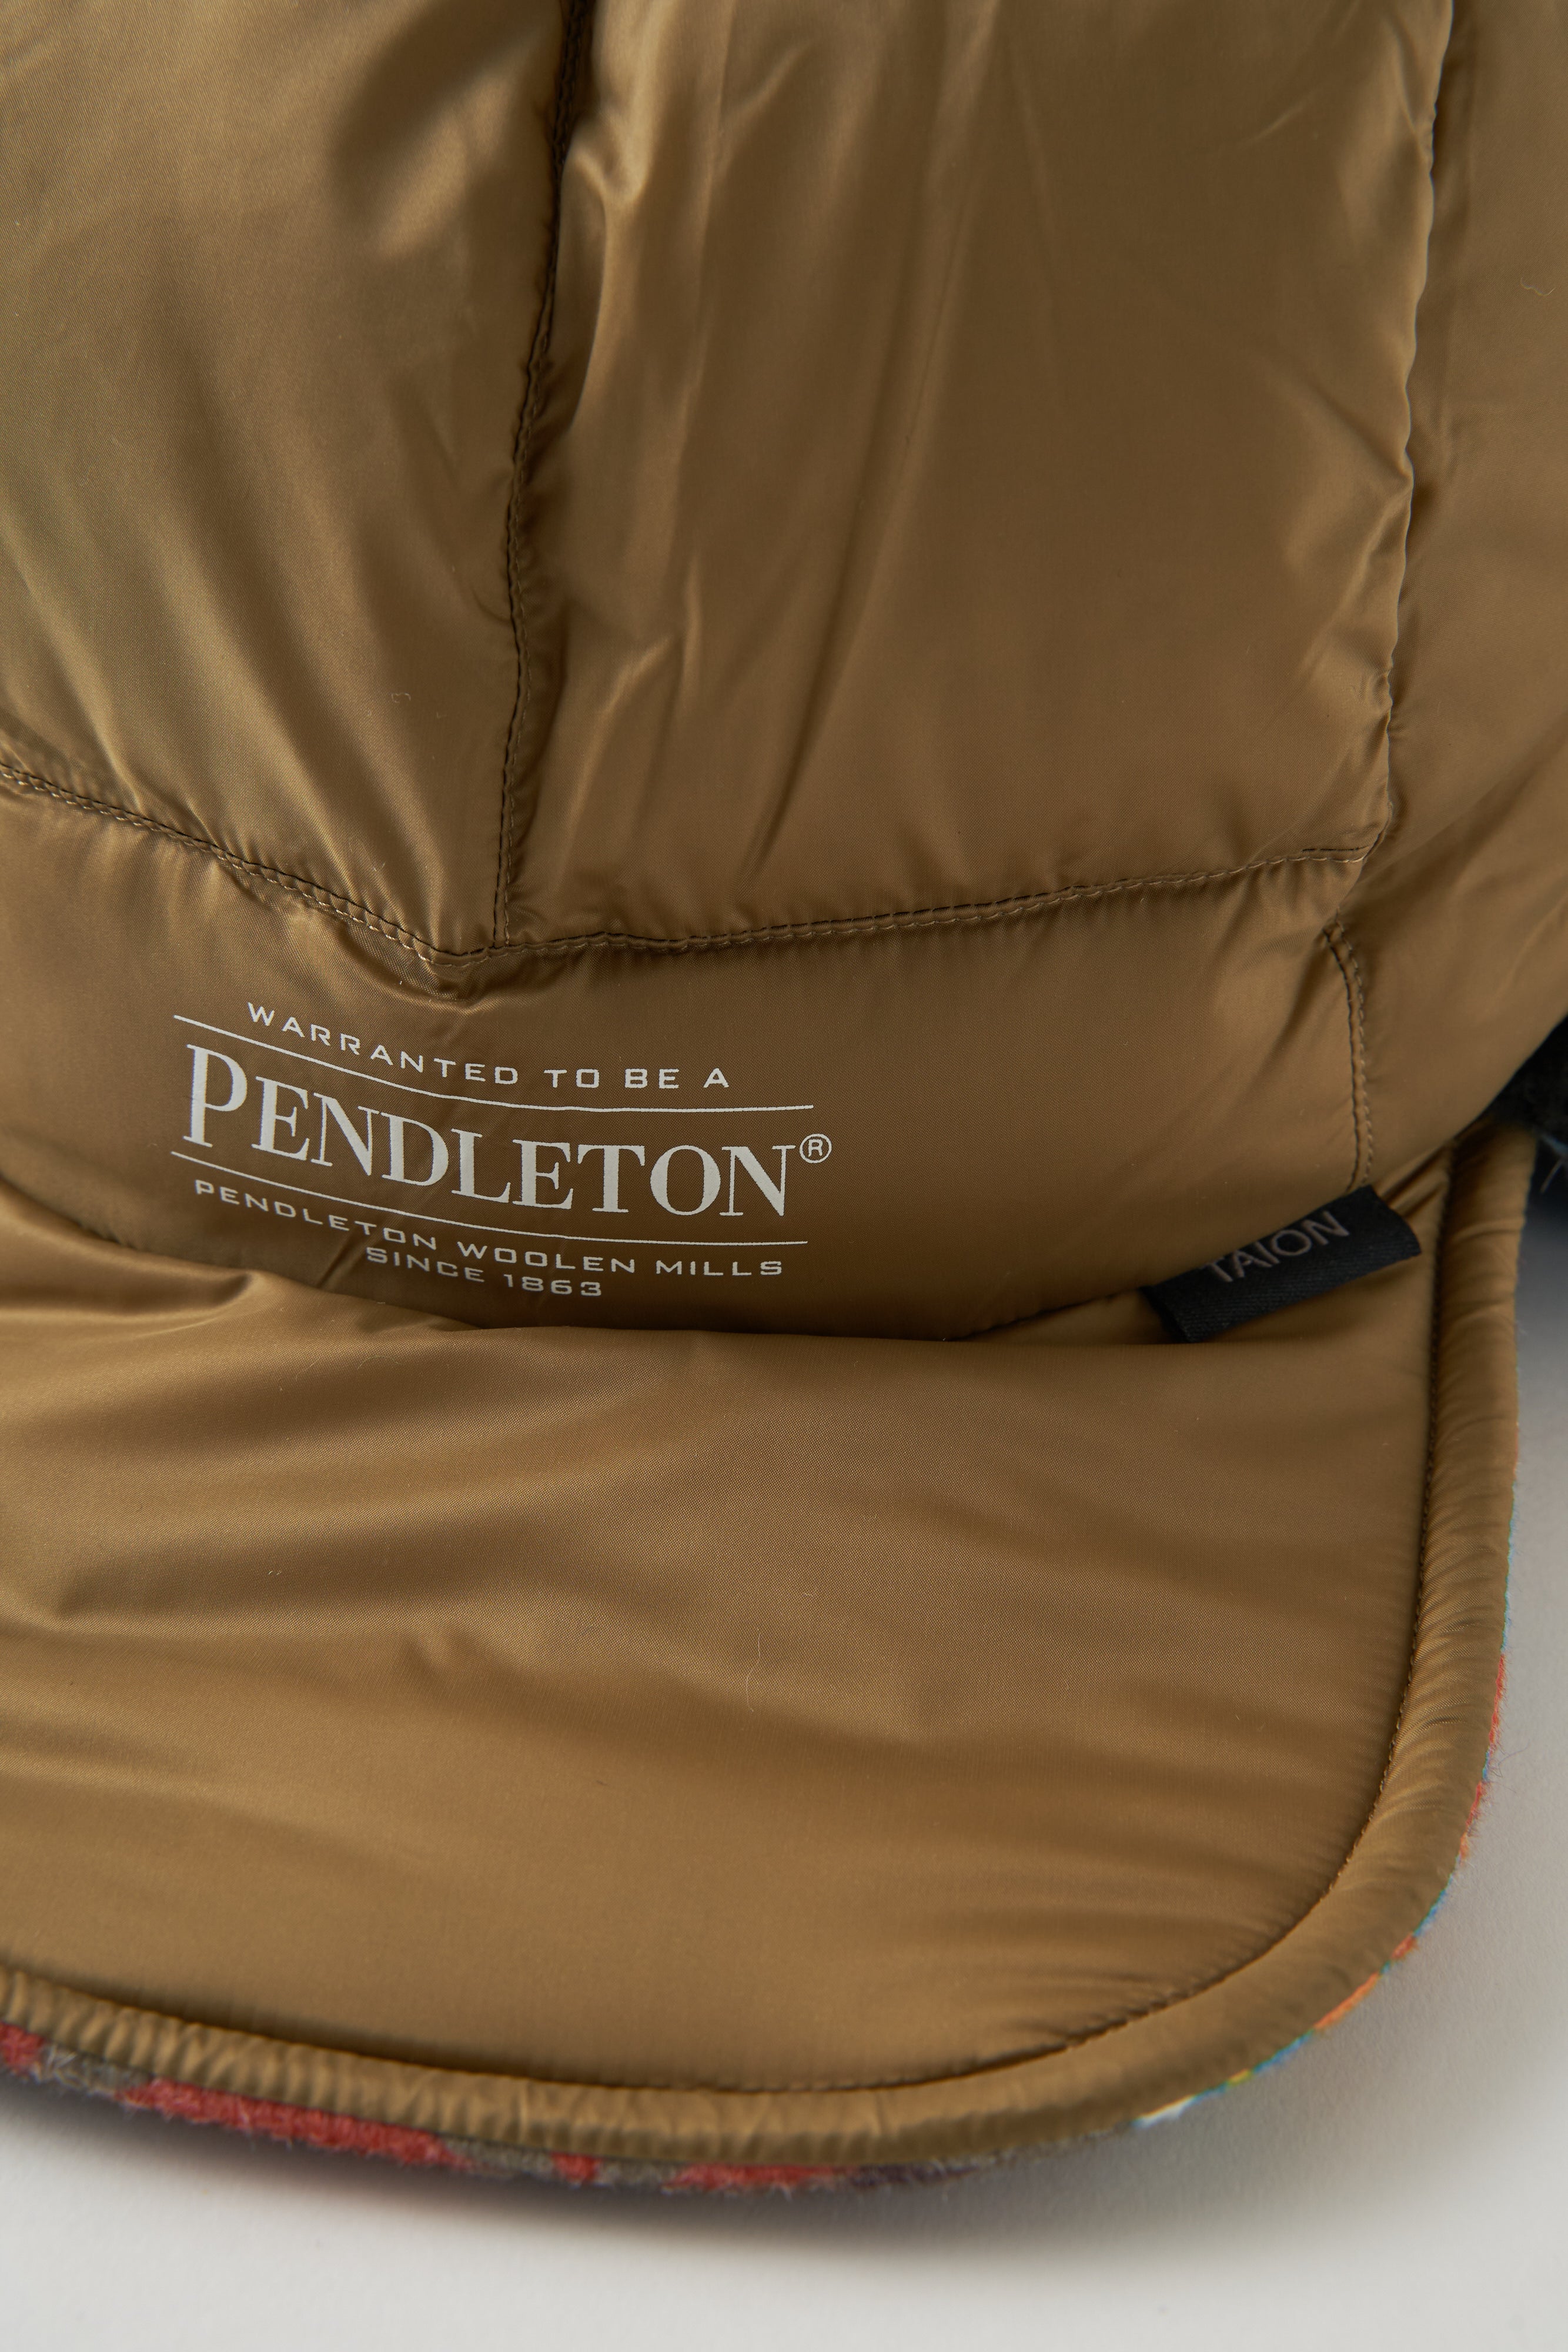 PENDLETON x TAION / REVERSIBLE WARM CAP